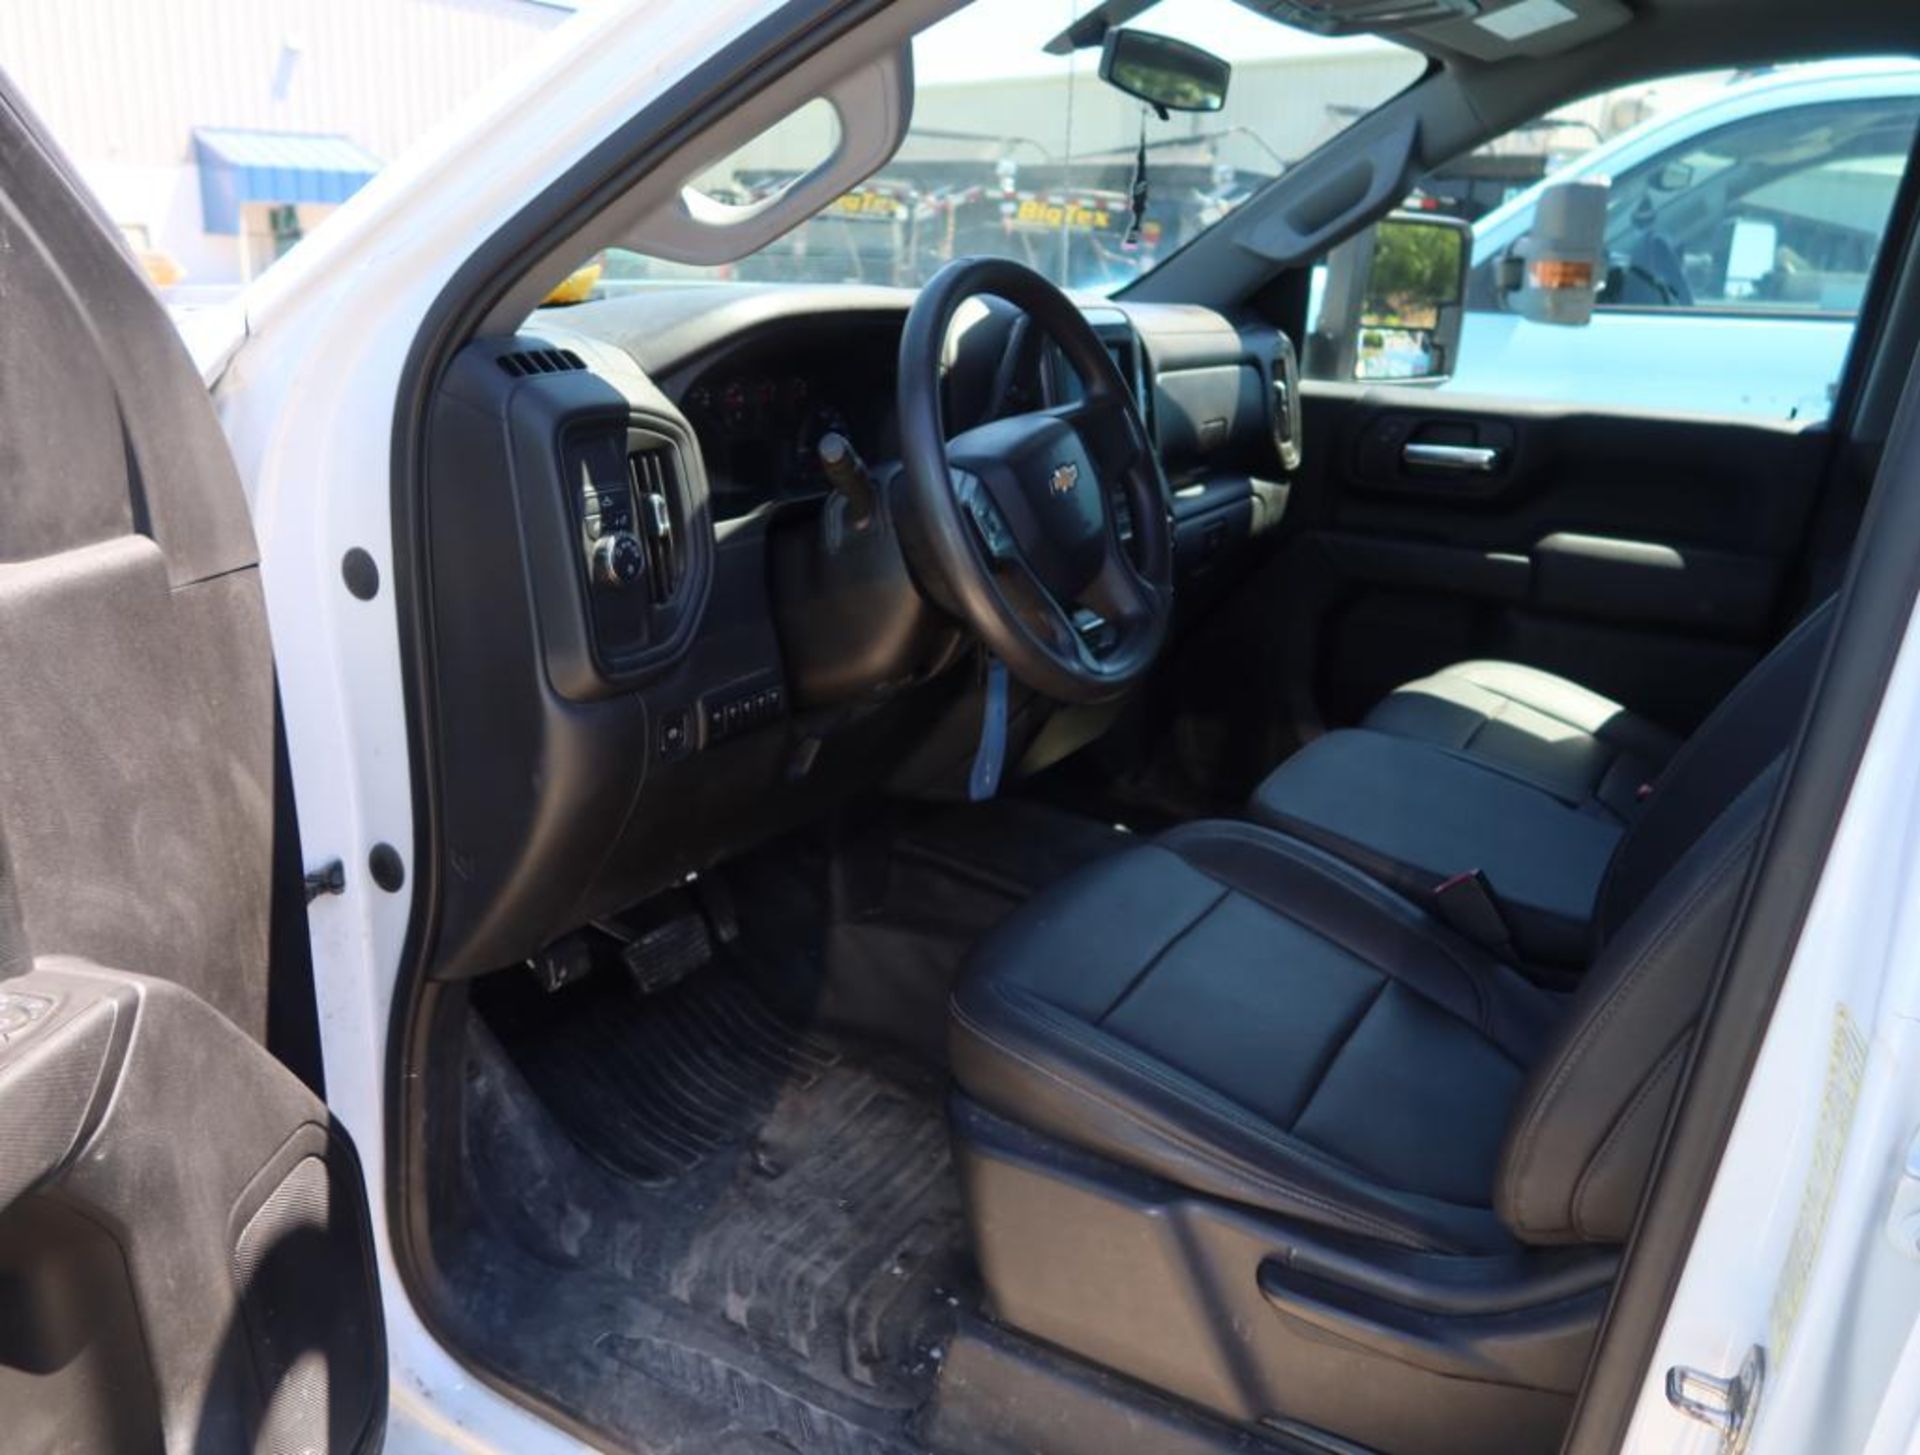 2021 Chevy Silverado 2WD 4 Door Crew Cab Service Body w/Ladder Rack, Gas License# QTJ-P77, VIN 1GB1W - Image 6 of 8